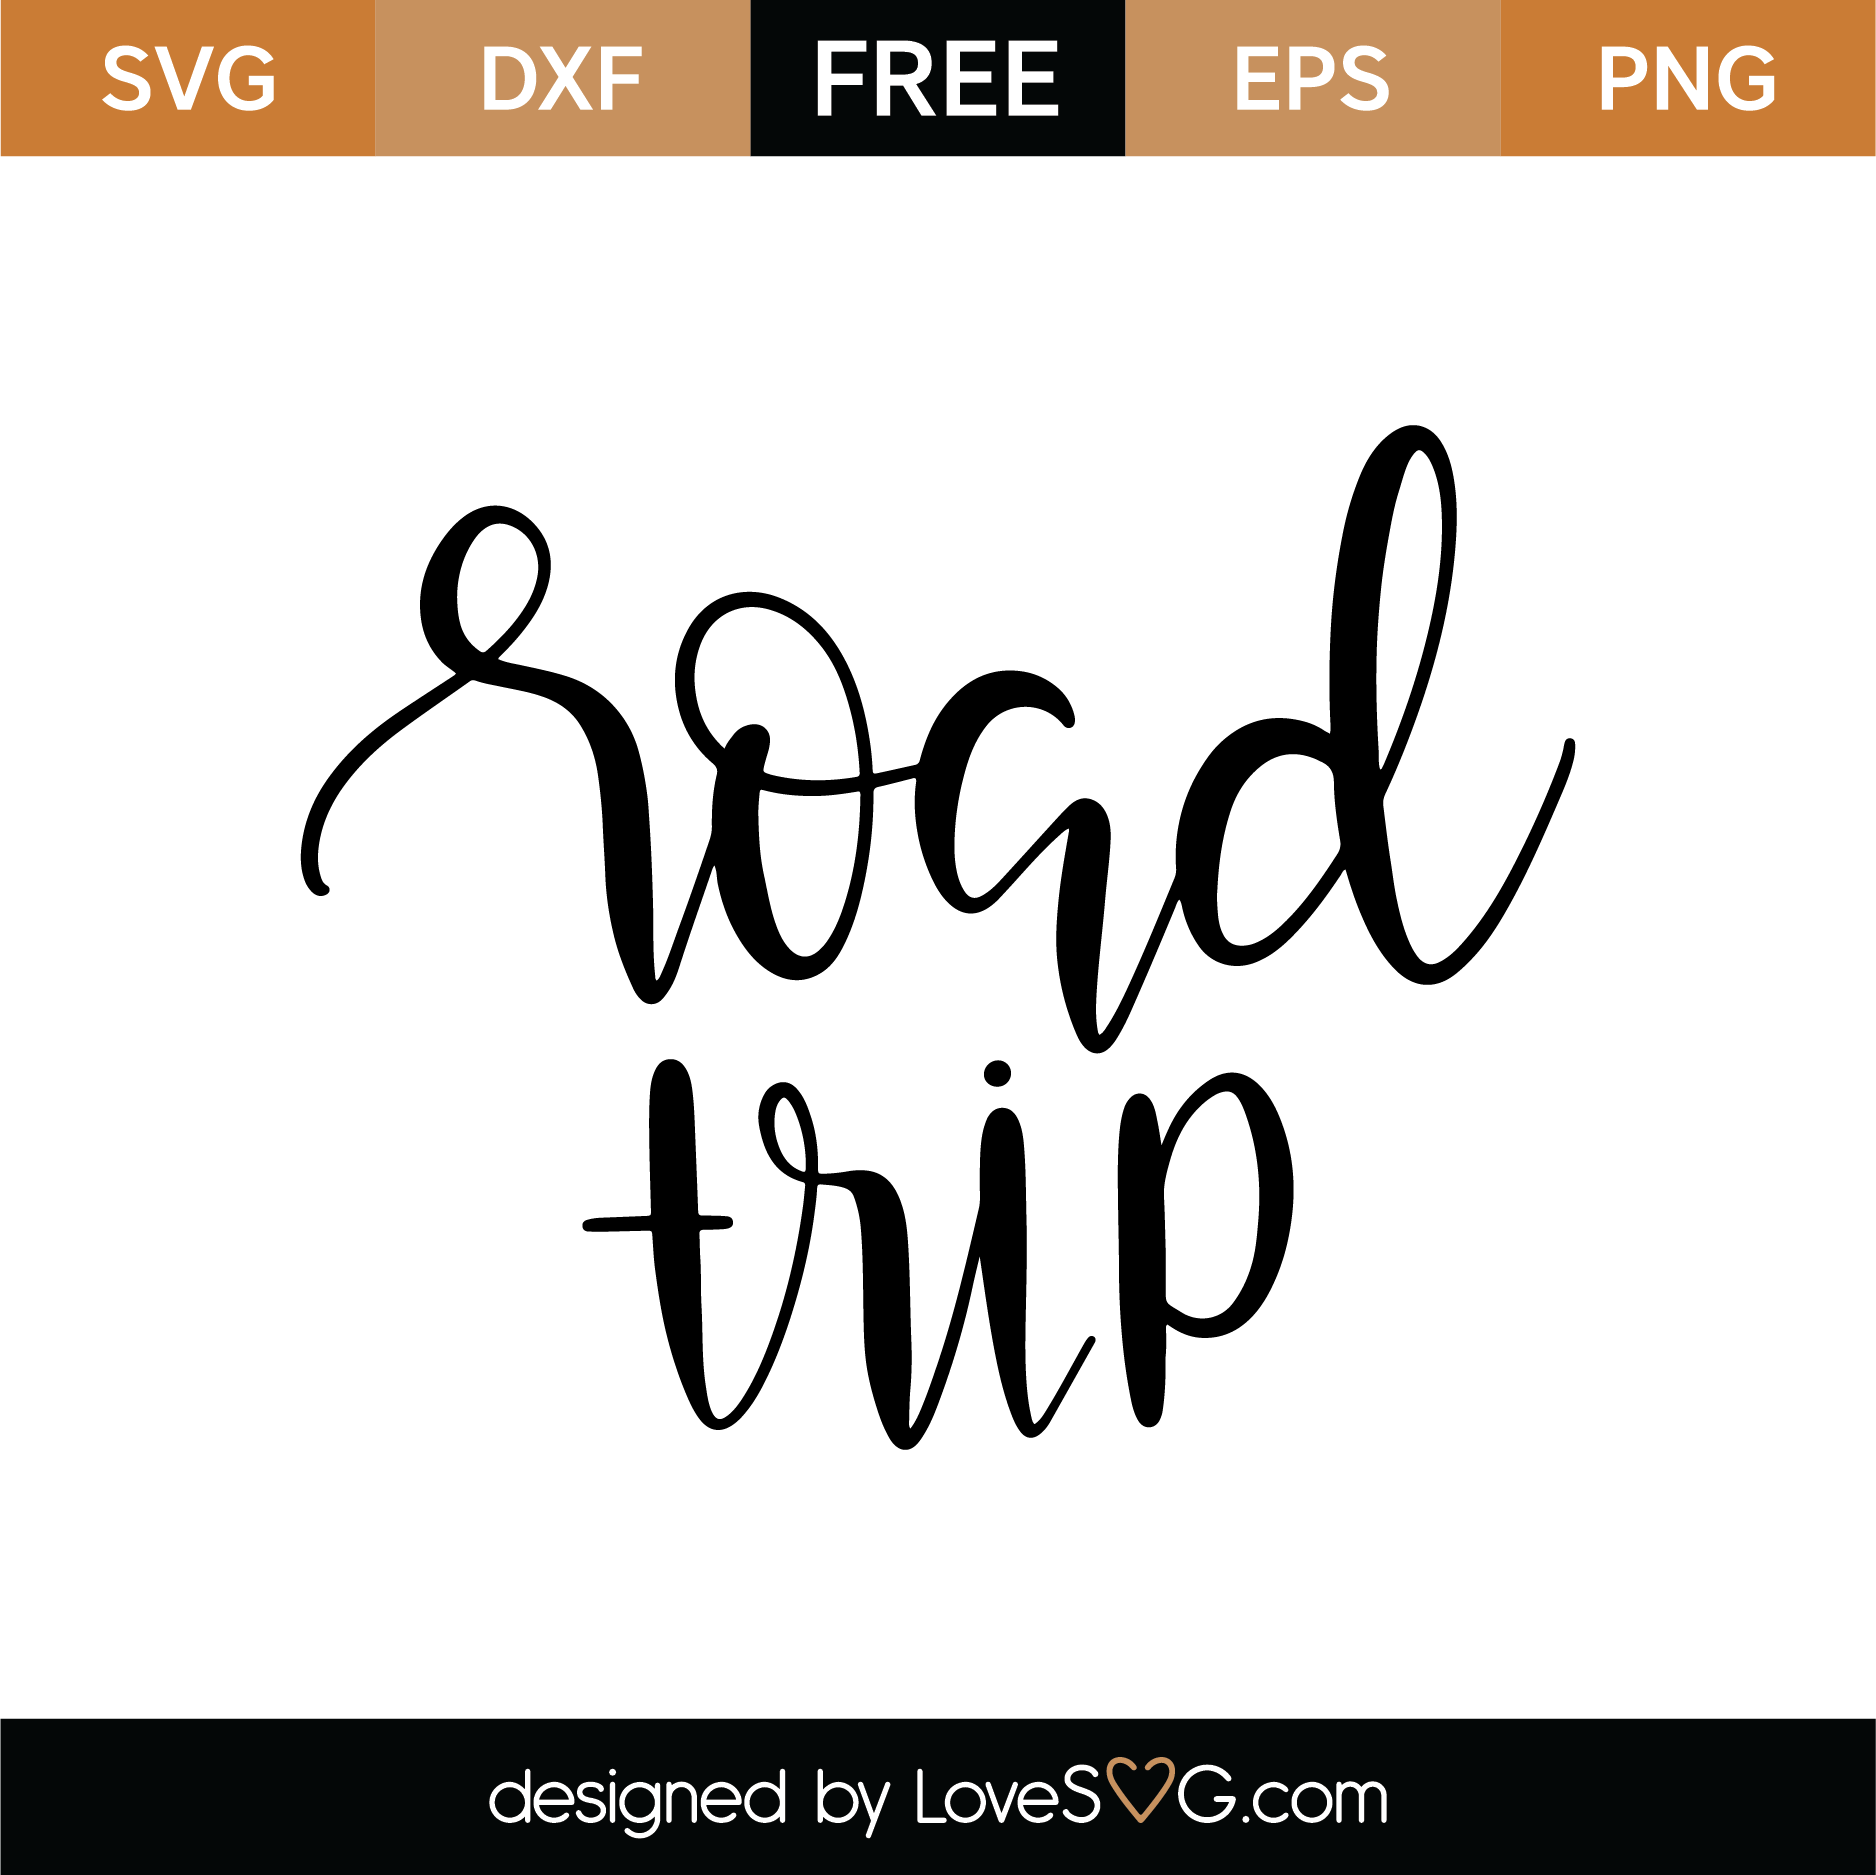 Download Free Road Trip SVG Cut File | Lovesvg.com